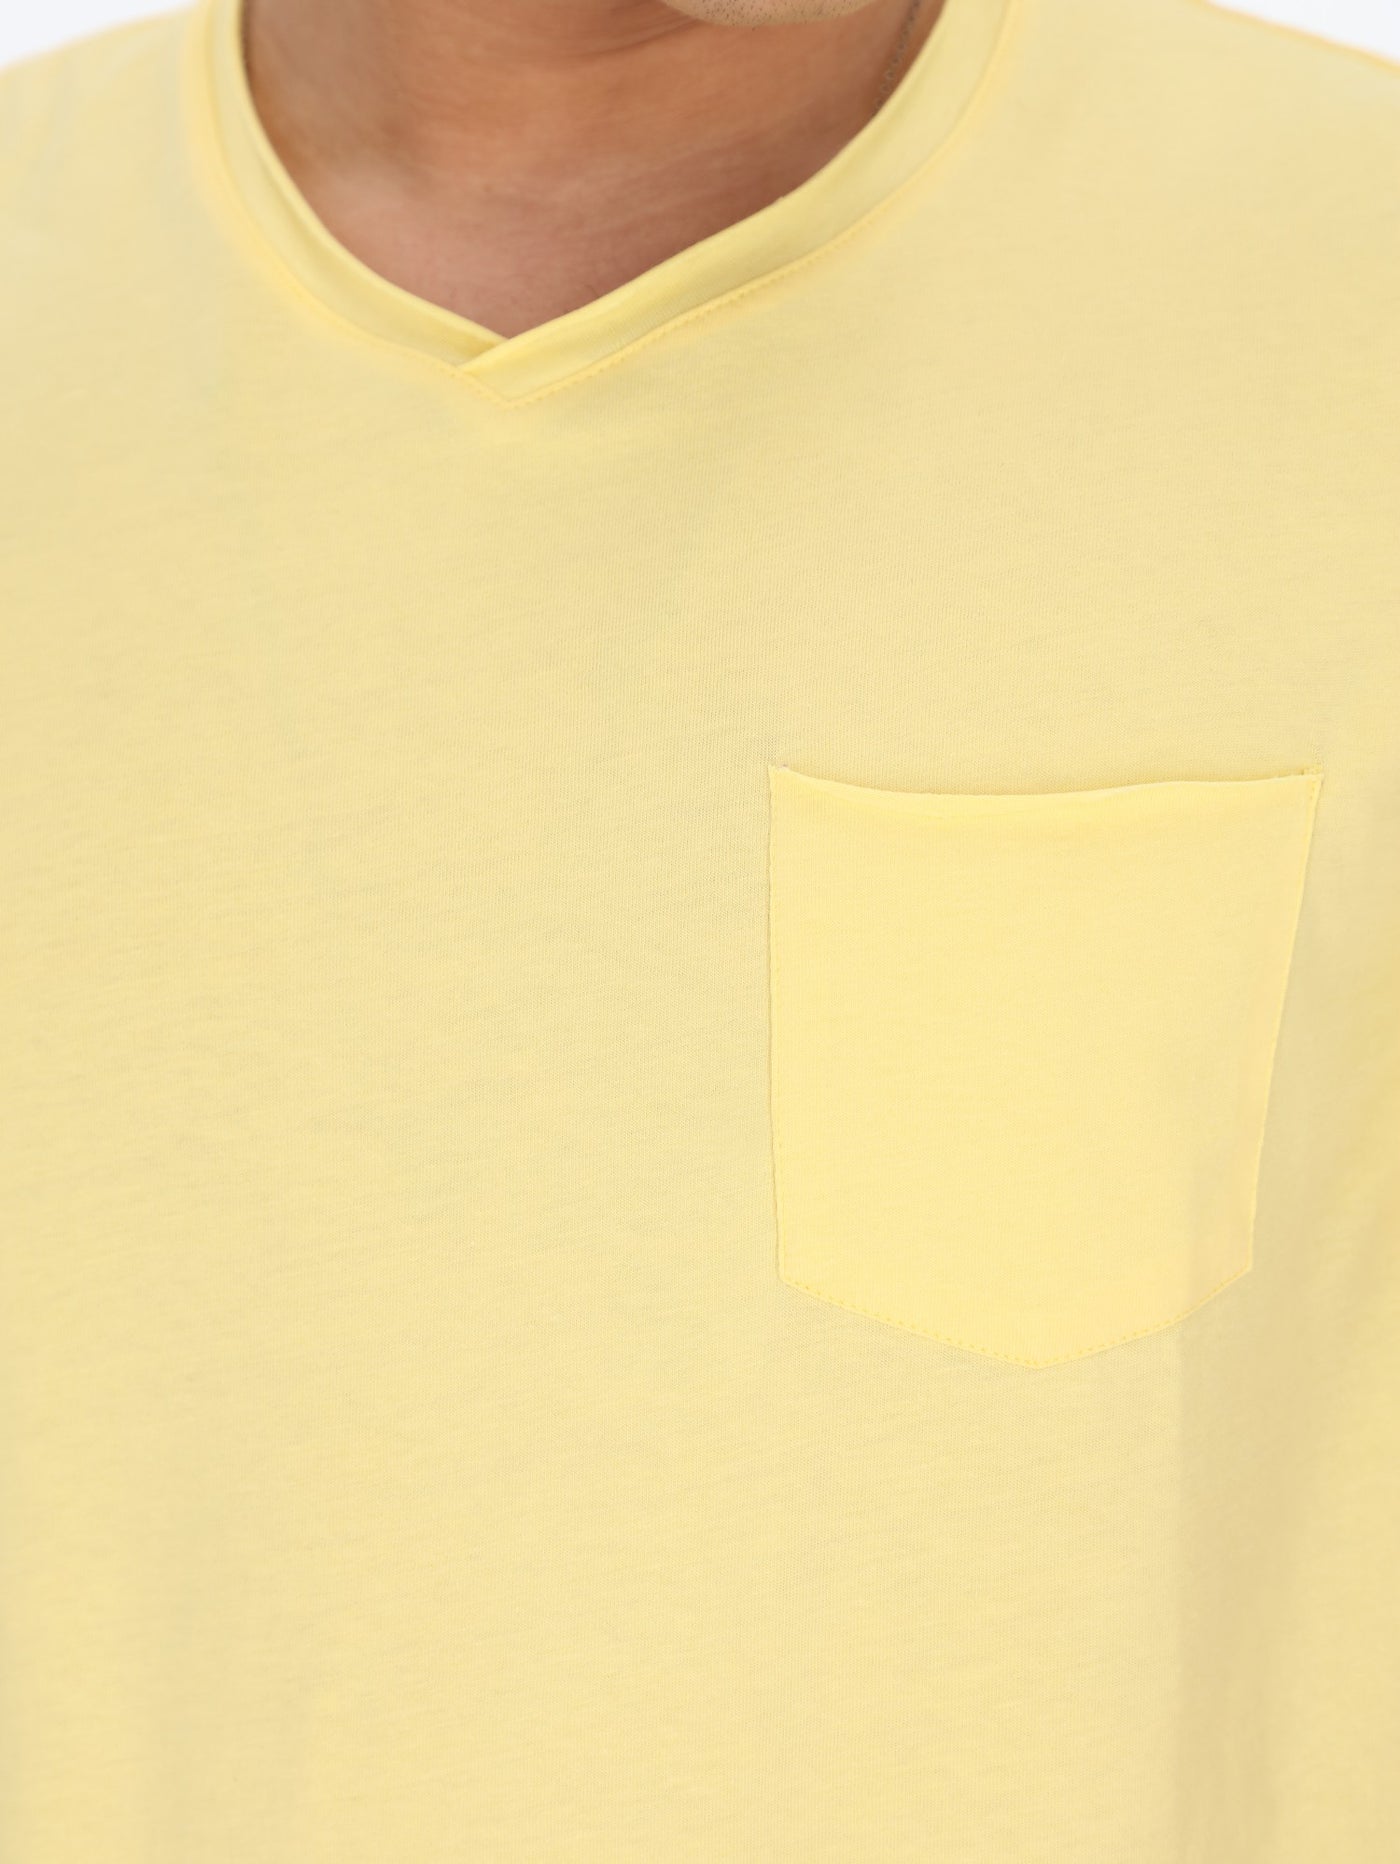 Basic Front Pocket T-Shirt